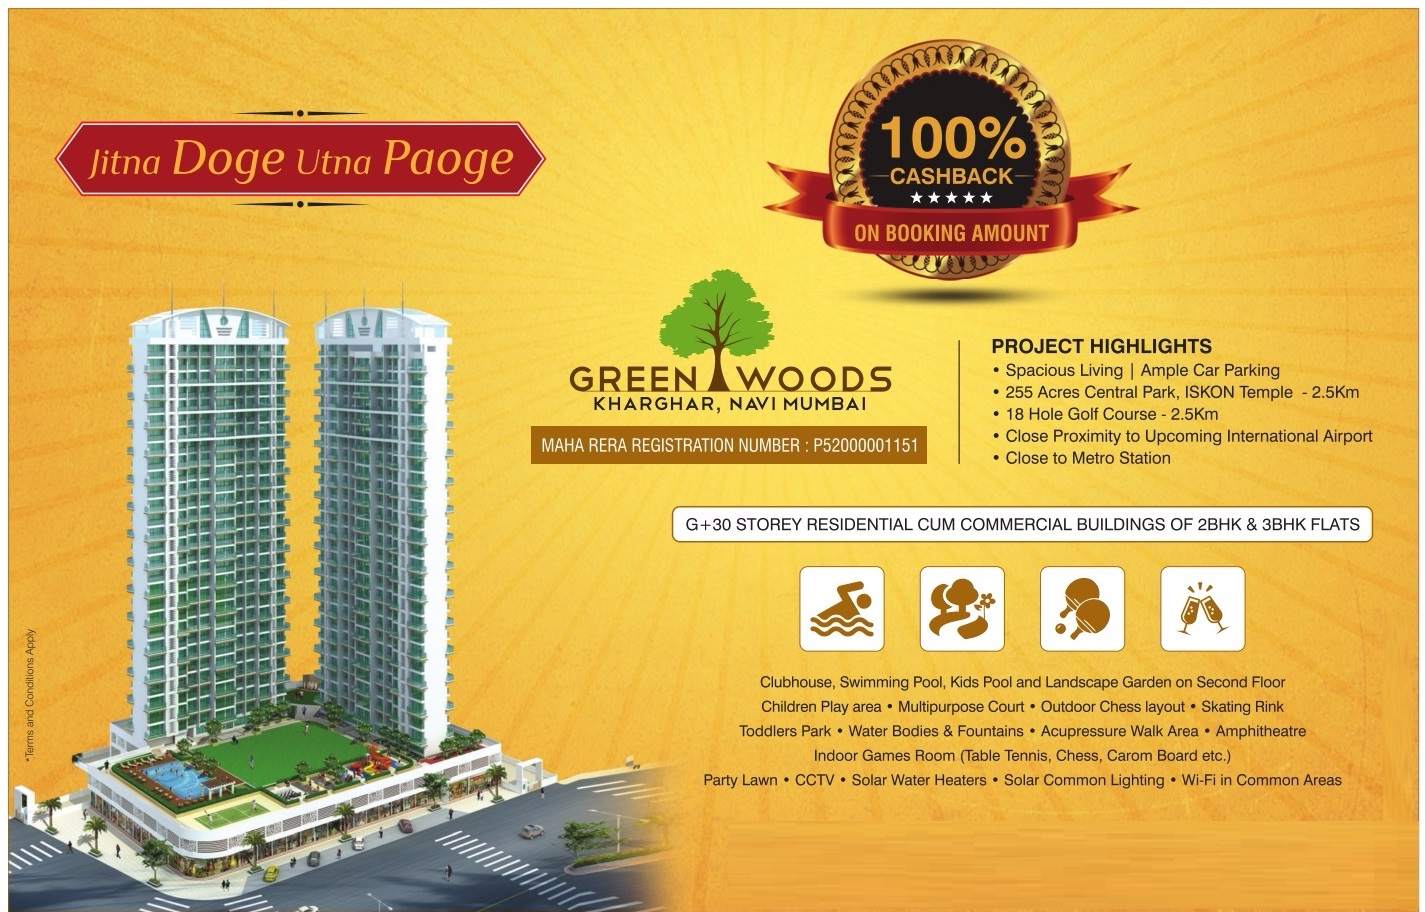 Get 100% cashback on booking amount at Proviso Green Woods in Navi Mumbai Update